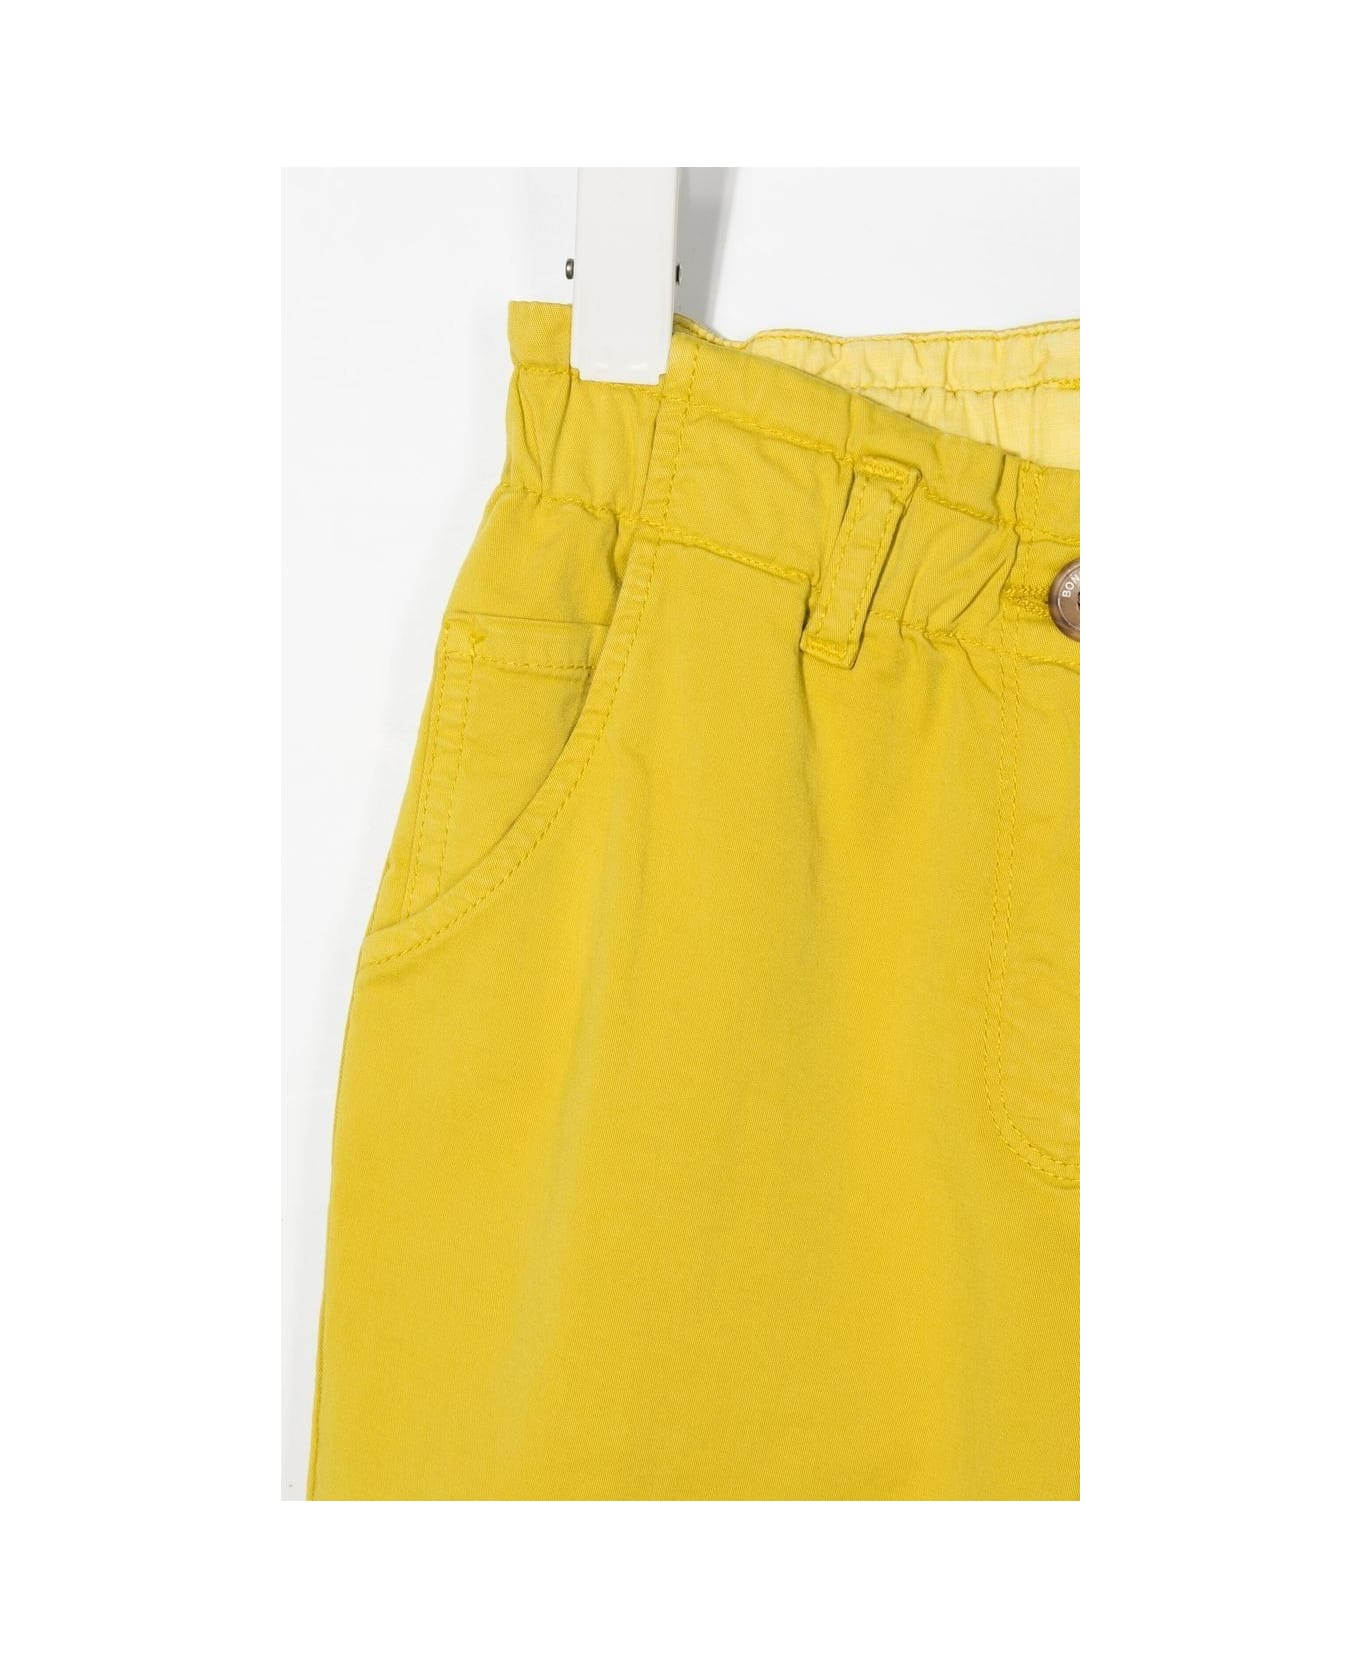 Bonpoint Kids Yellow Mom-style Sonie Trousers - Giallo